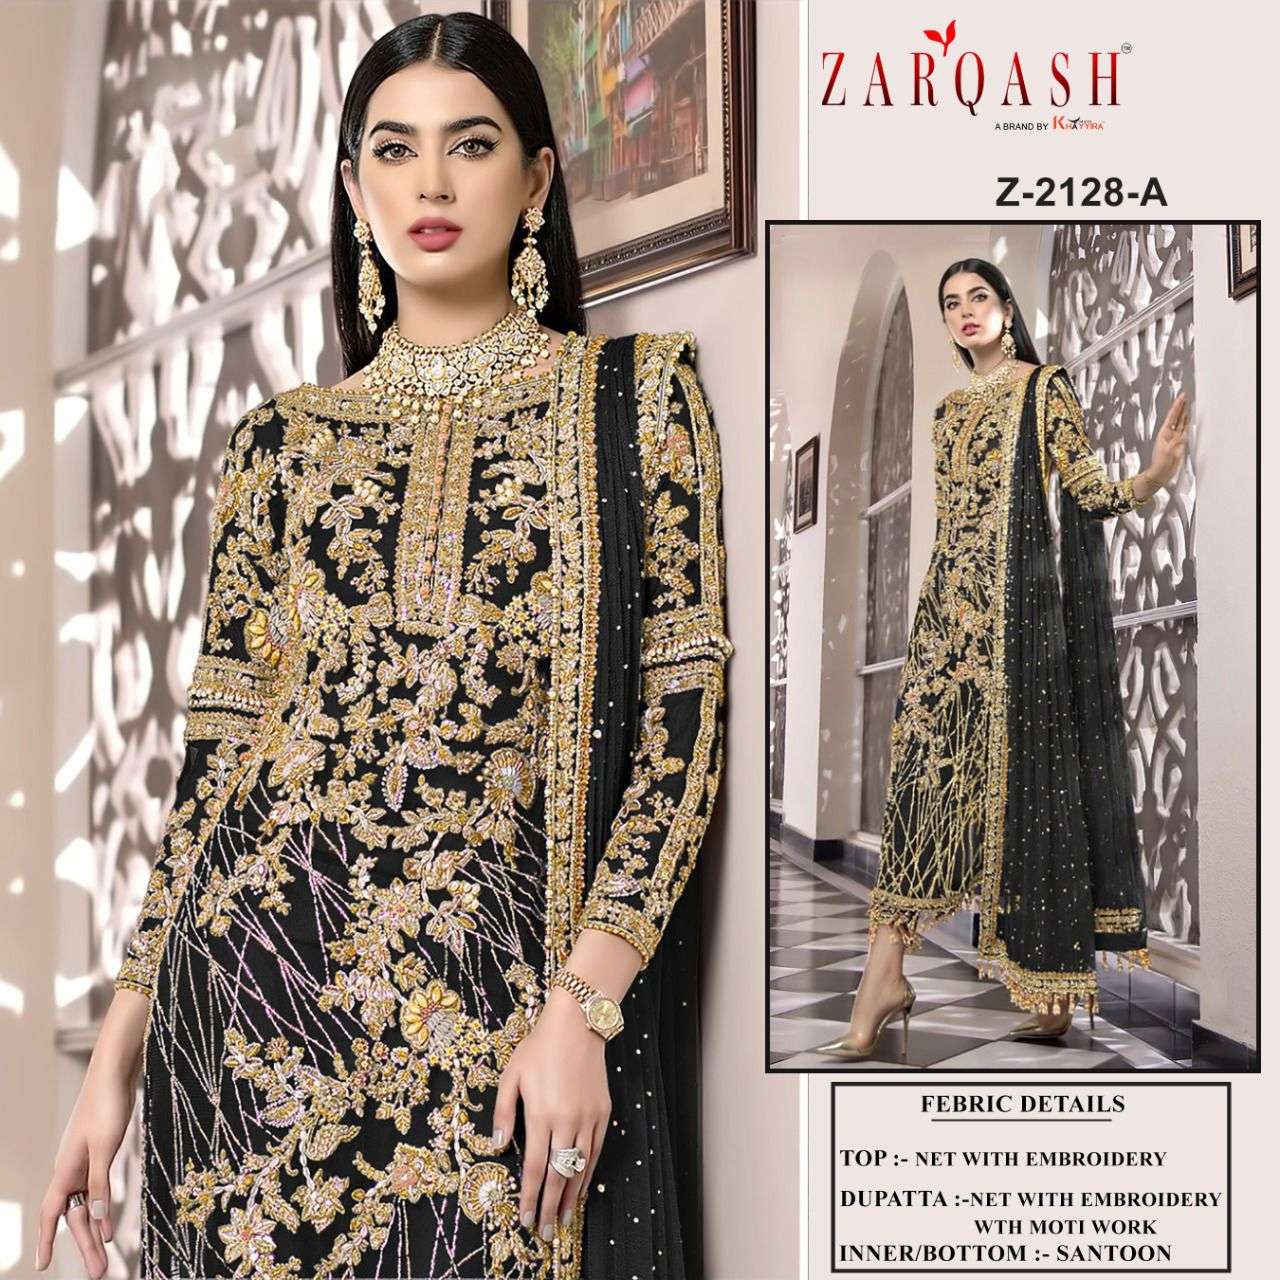 Zarqash Z-2128 net with embroidery suit 